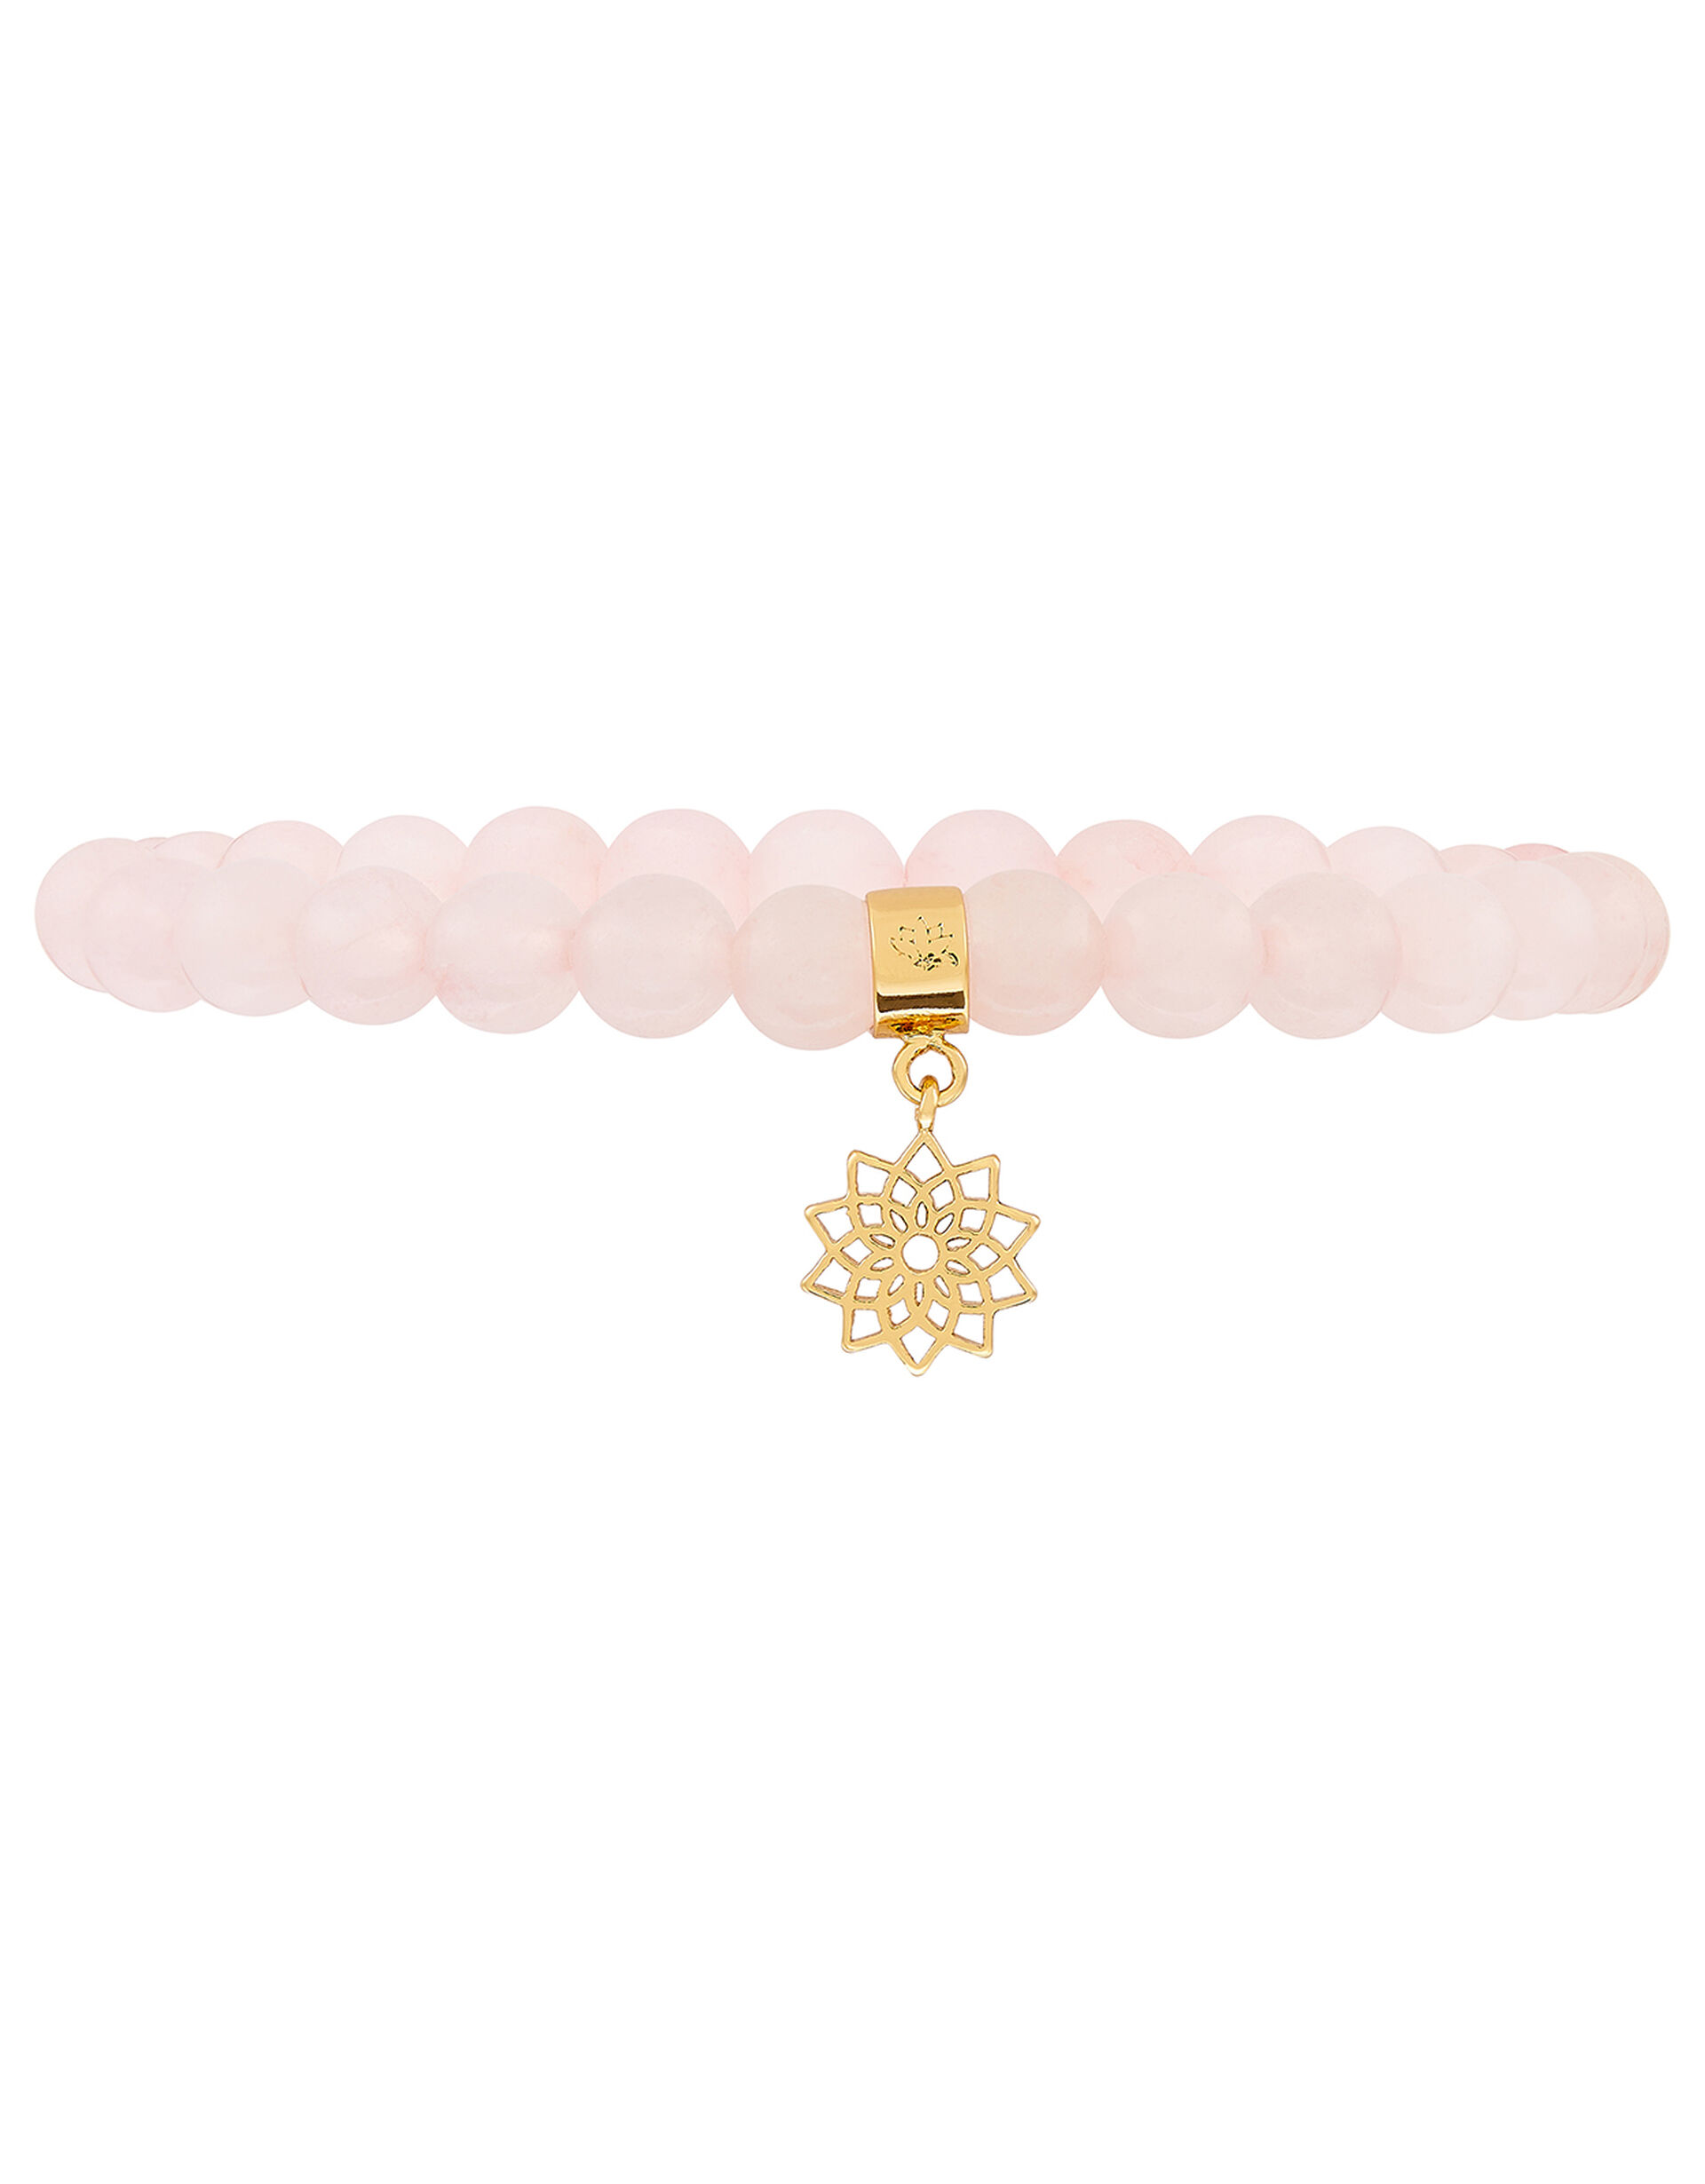 Rose Quartz Bead Bracelet with Crown Chakra Charm, , large